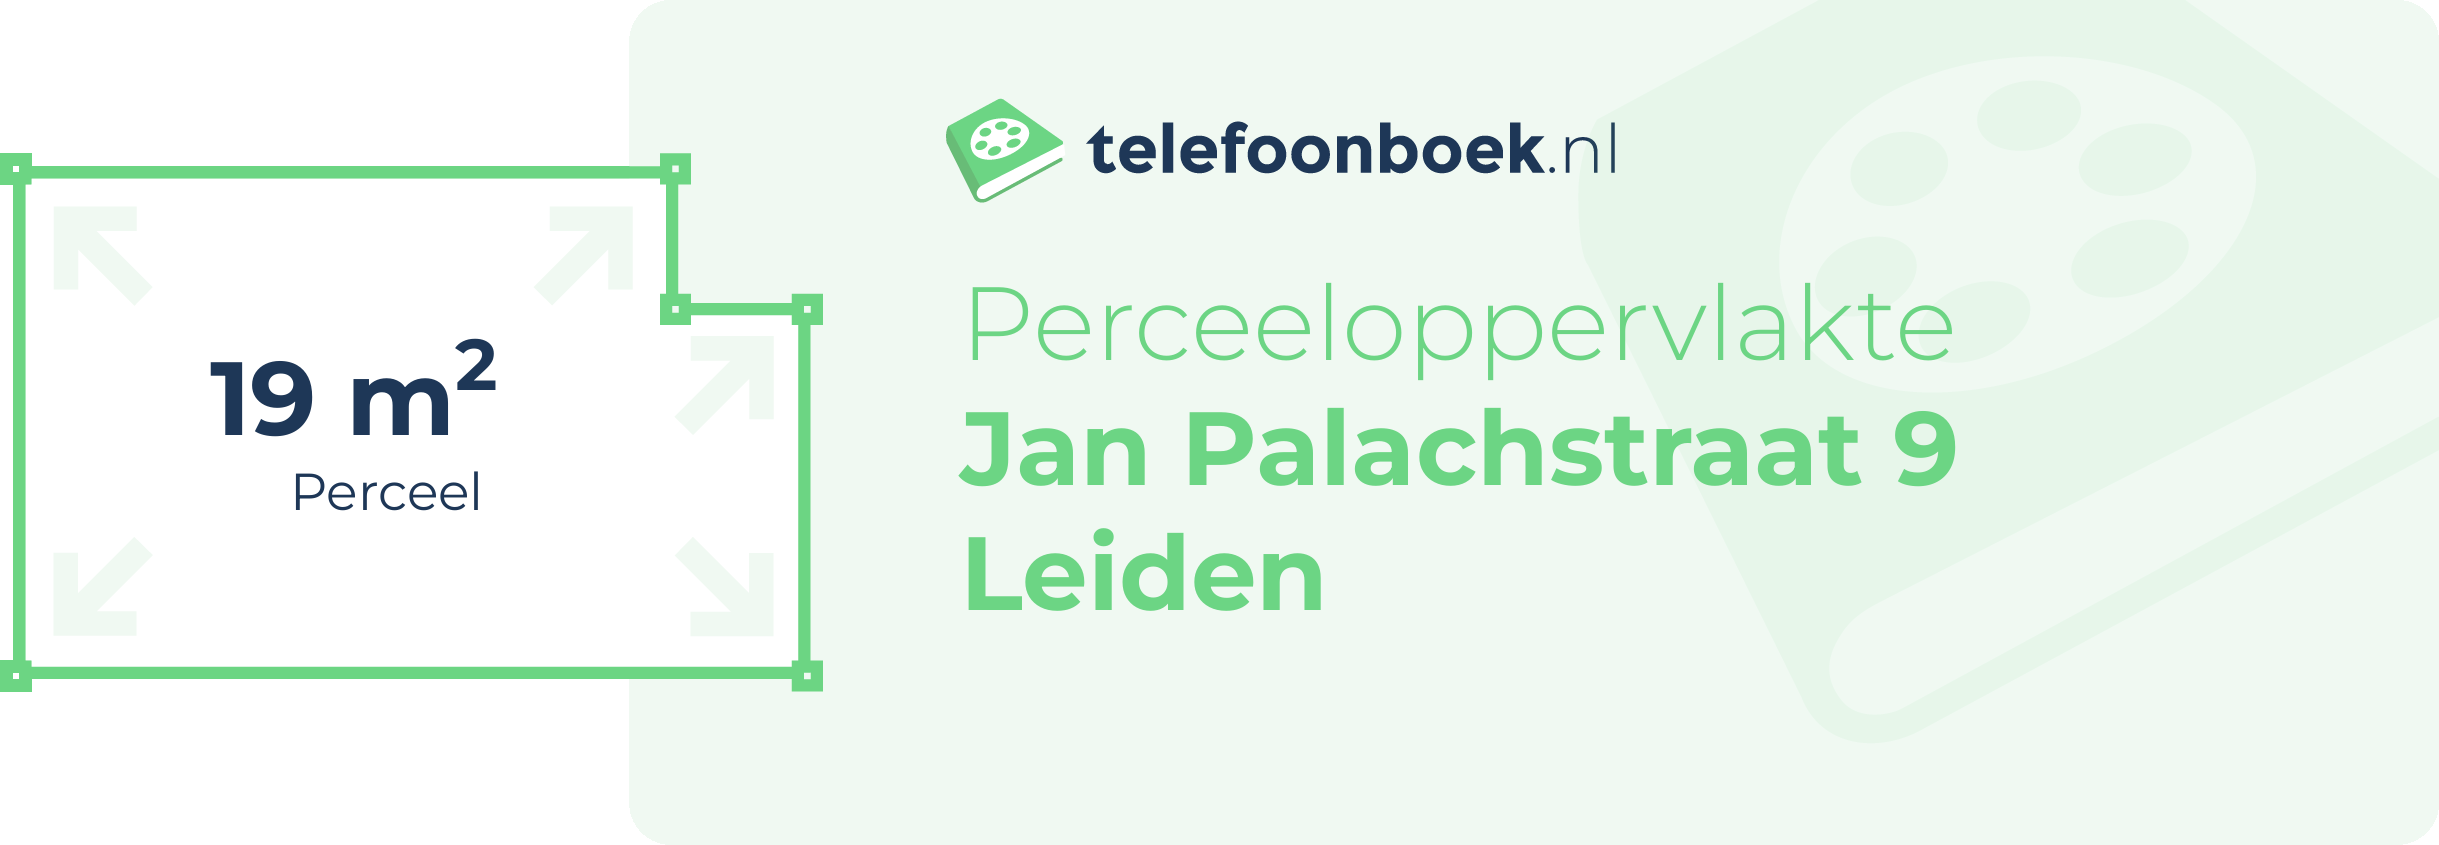 Perceeloppervlakte Jan Palachstraat 9 Leiden